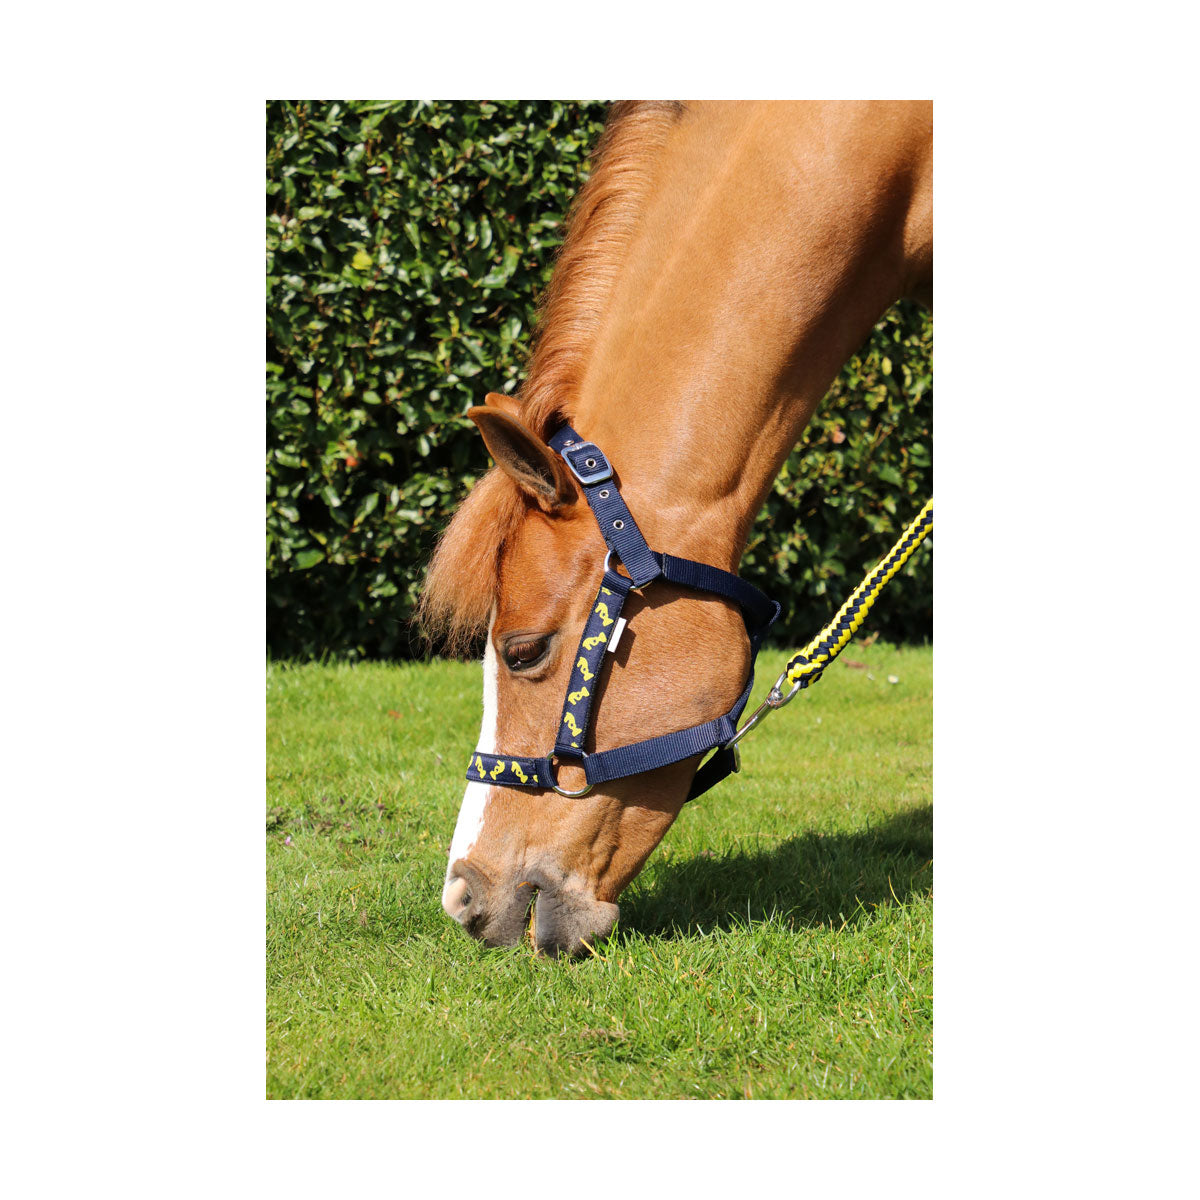 Lancelot Head Collar & Lead Rope by Little Knight Headcollar & Lead Rope Barnstaple Equestrian Supplies